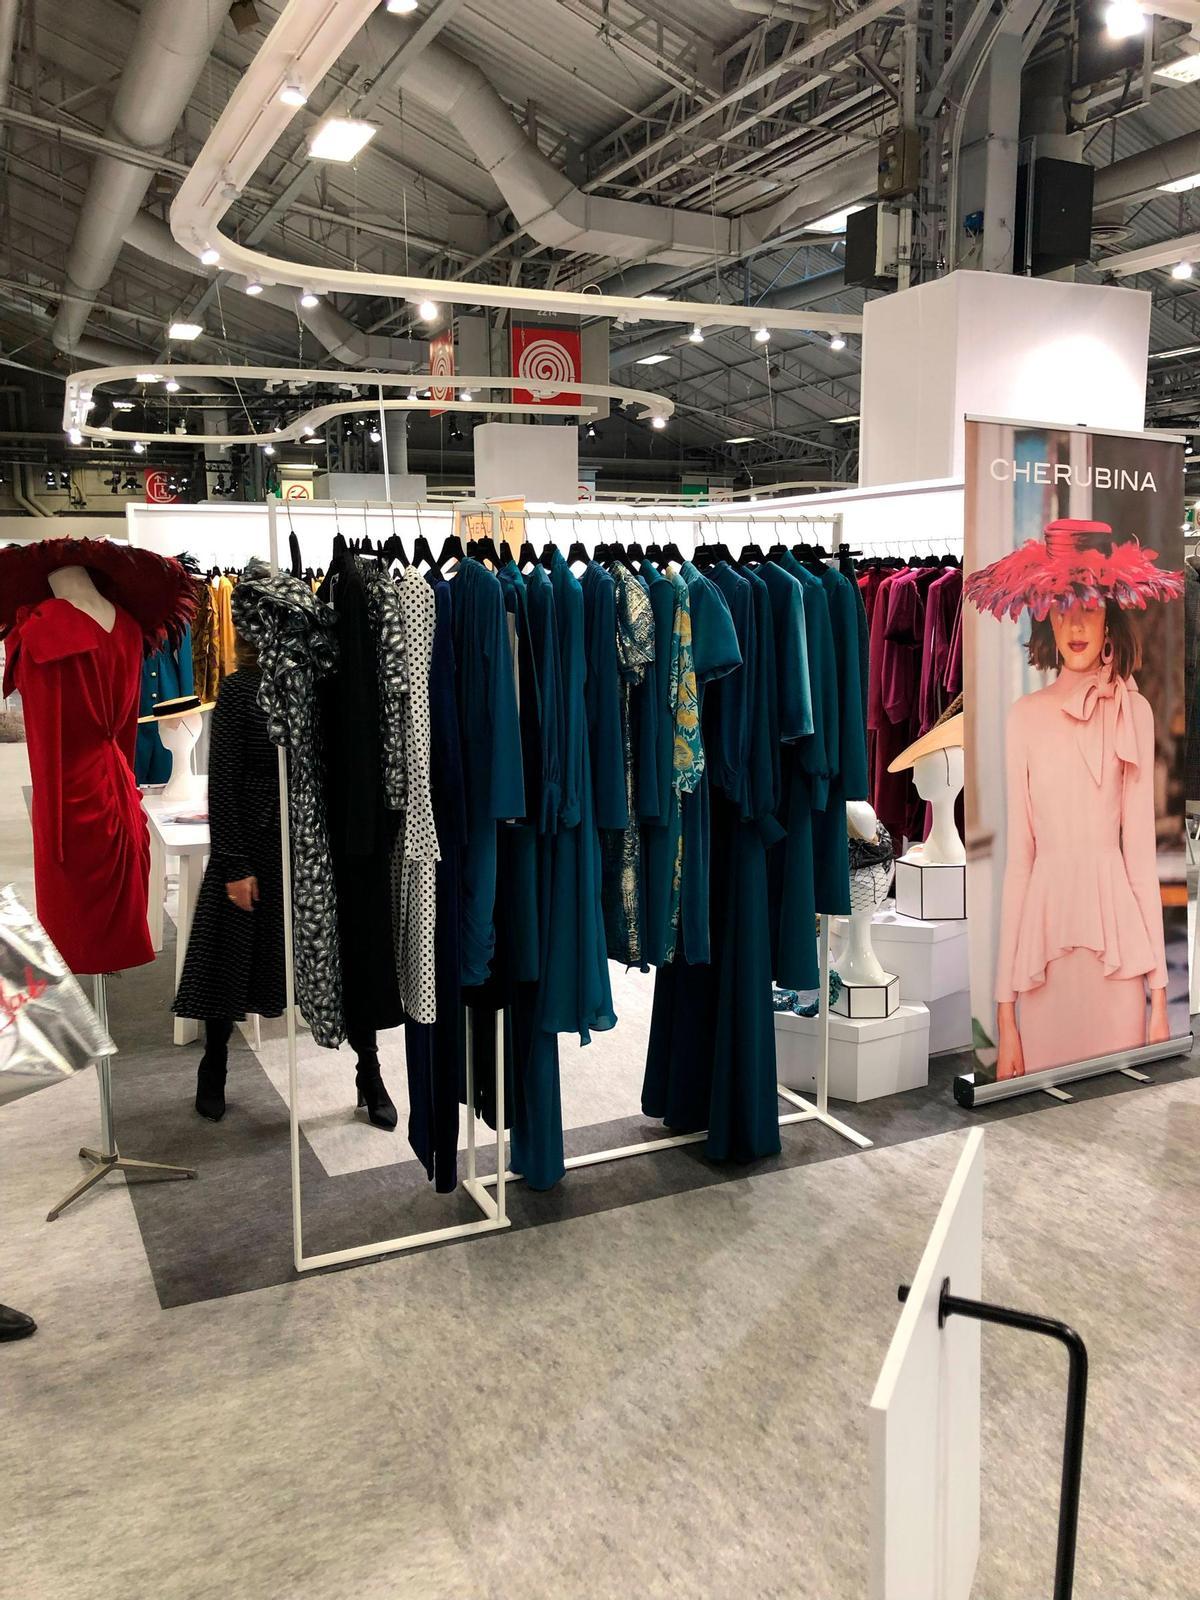 Colección de moda de Cherubina expuesta en la feria de moda Who's Next celebrada en París.